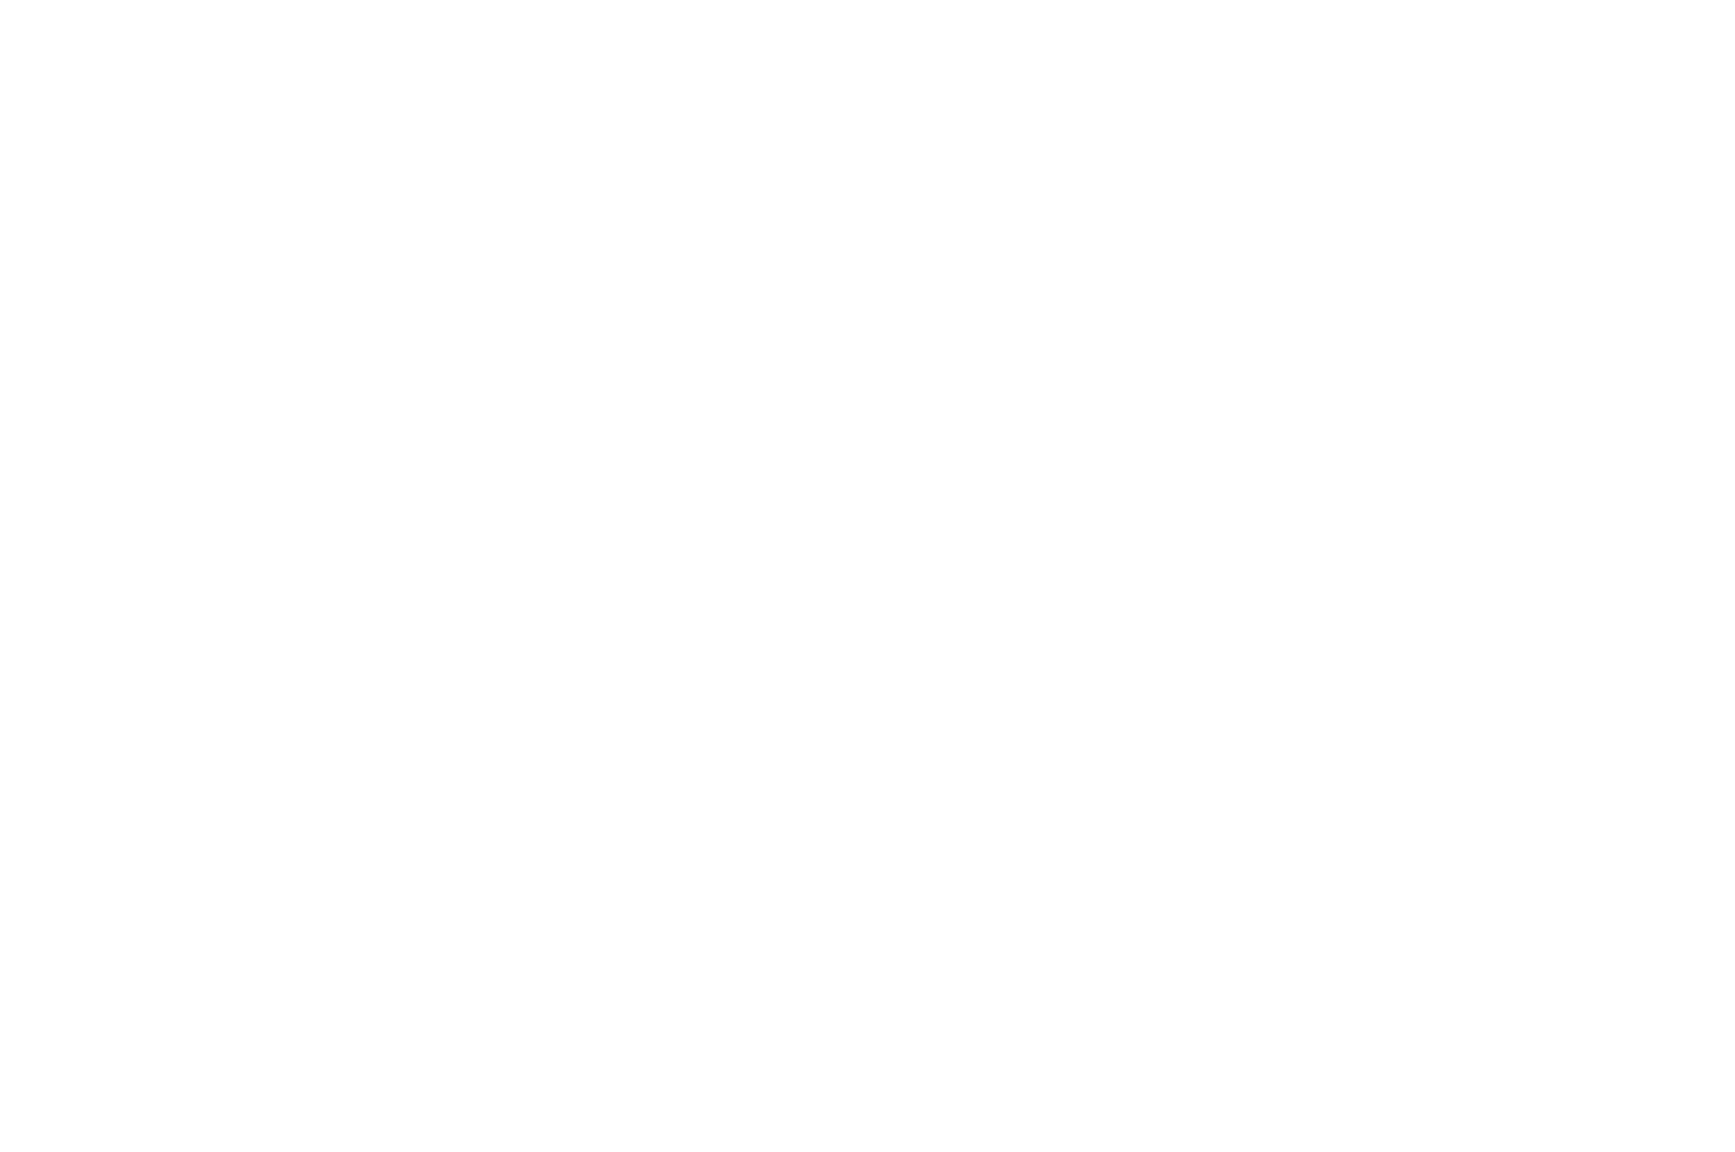 NOMINEE - Milan Arthouse Film Awards - 2022.png